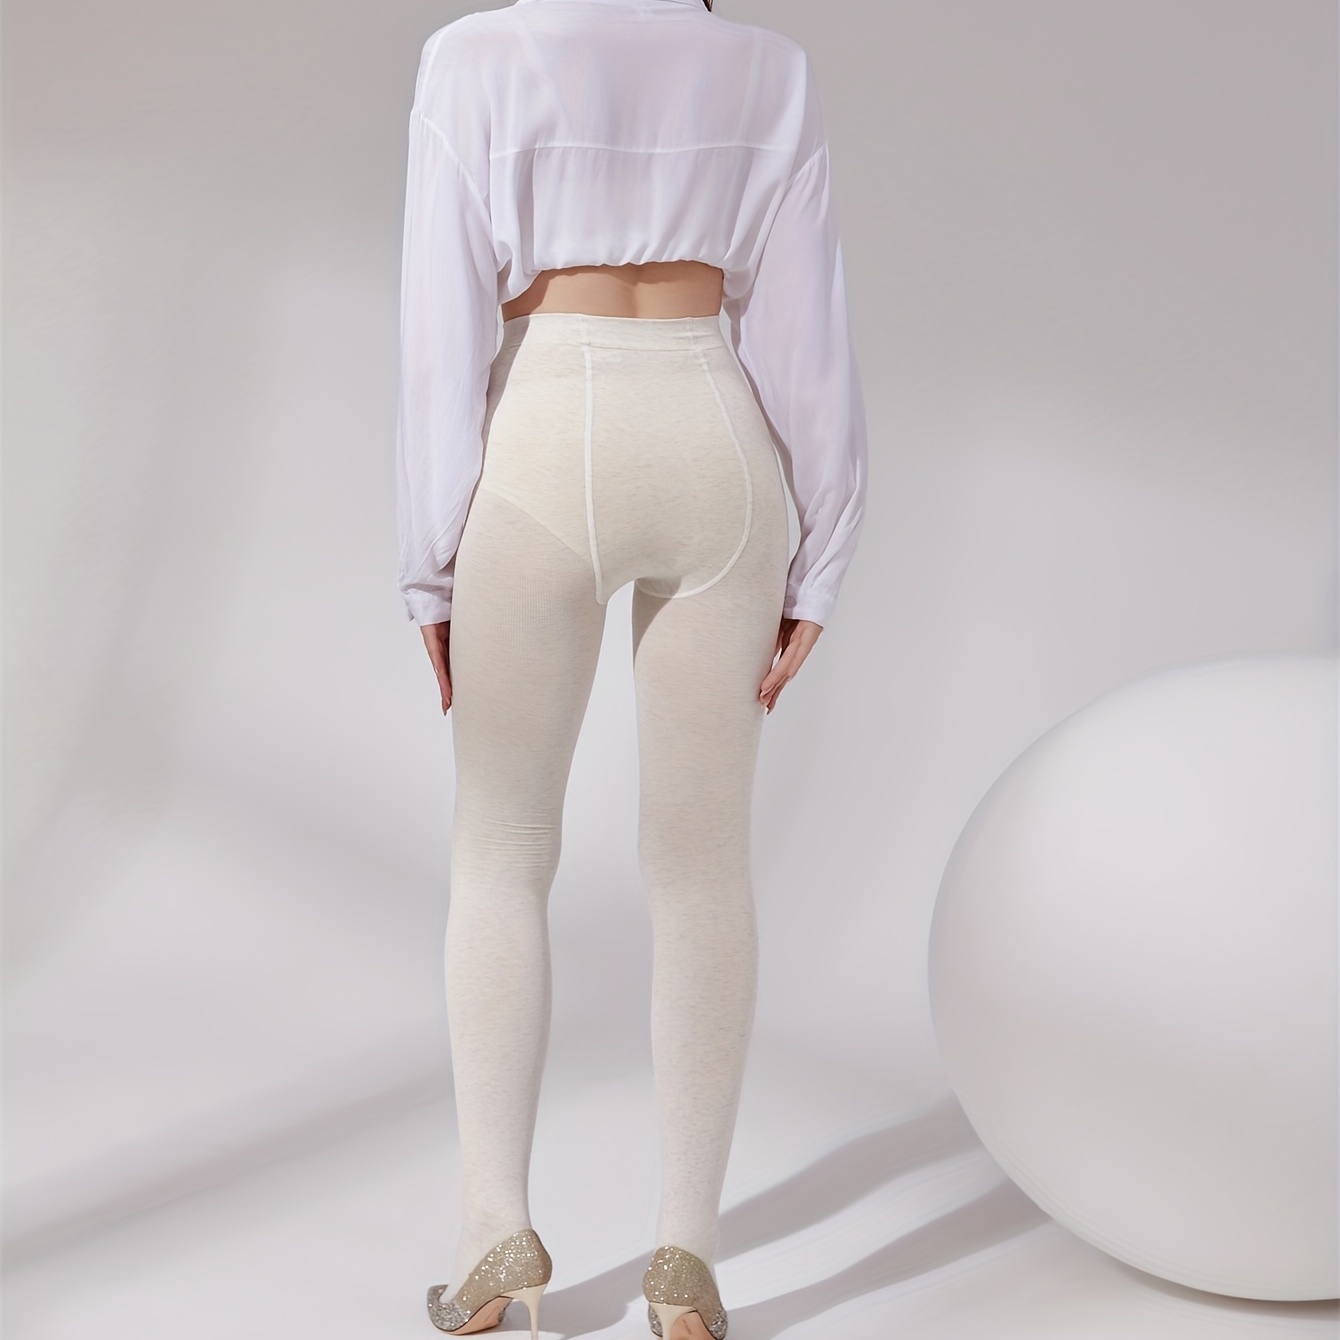 Solid Slim Tights Opaque High Waist Elastic Leggings Women's